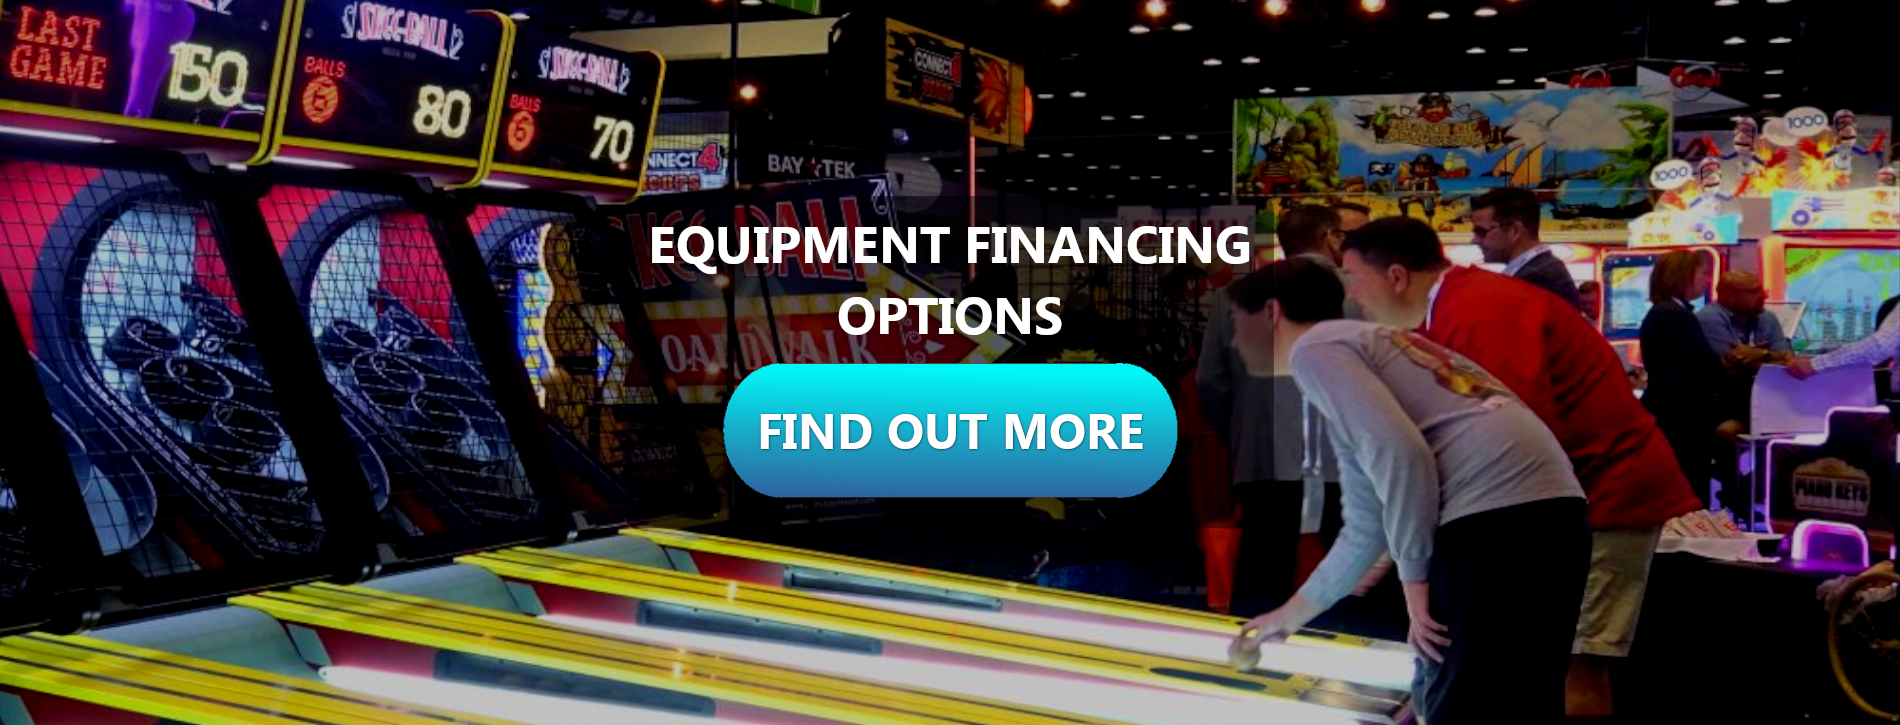 Financing arcade equipment through PrimeTime Amusements partners